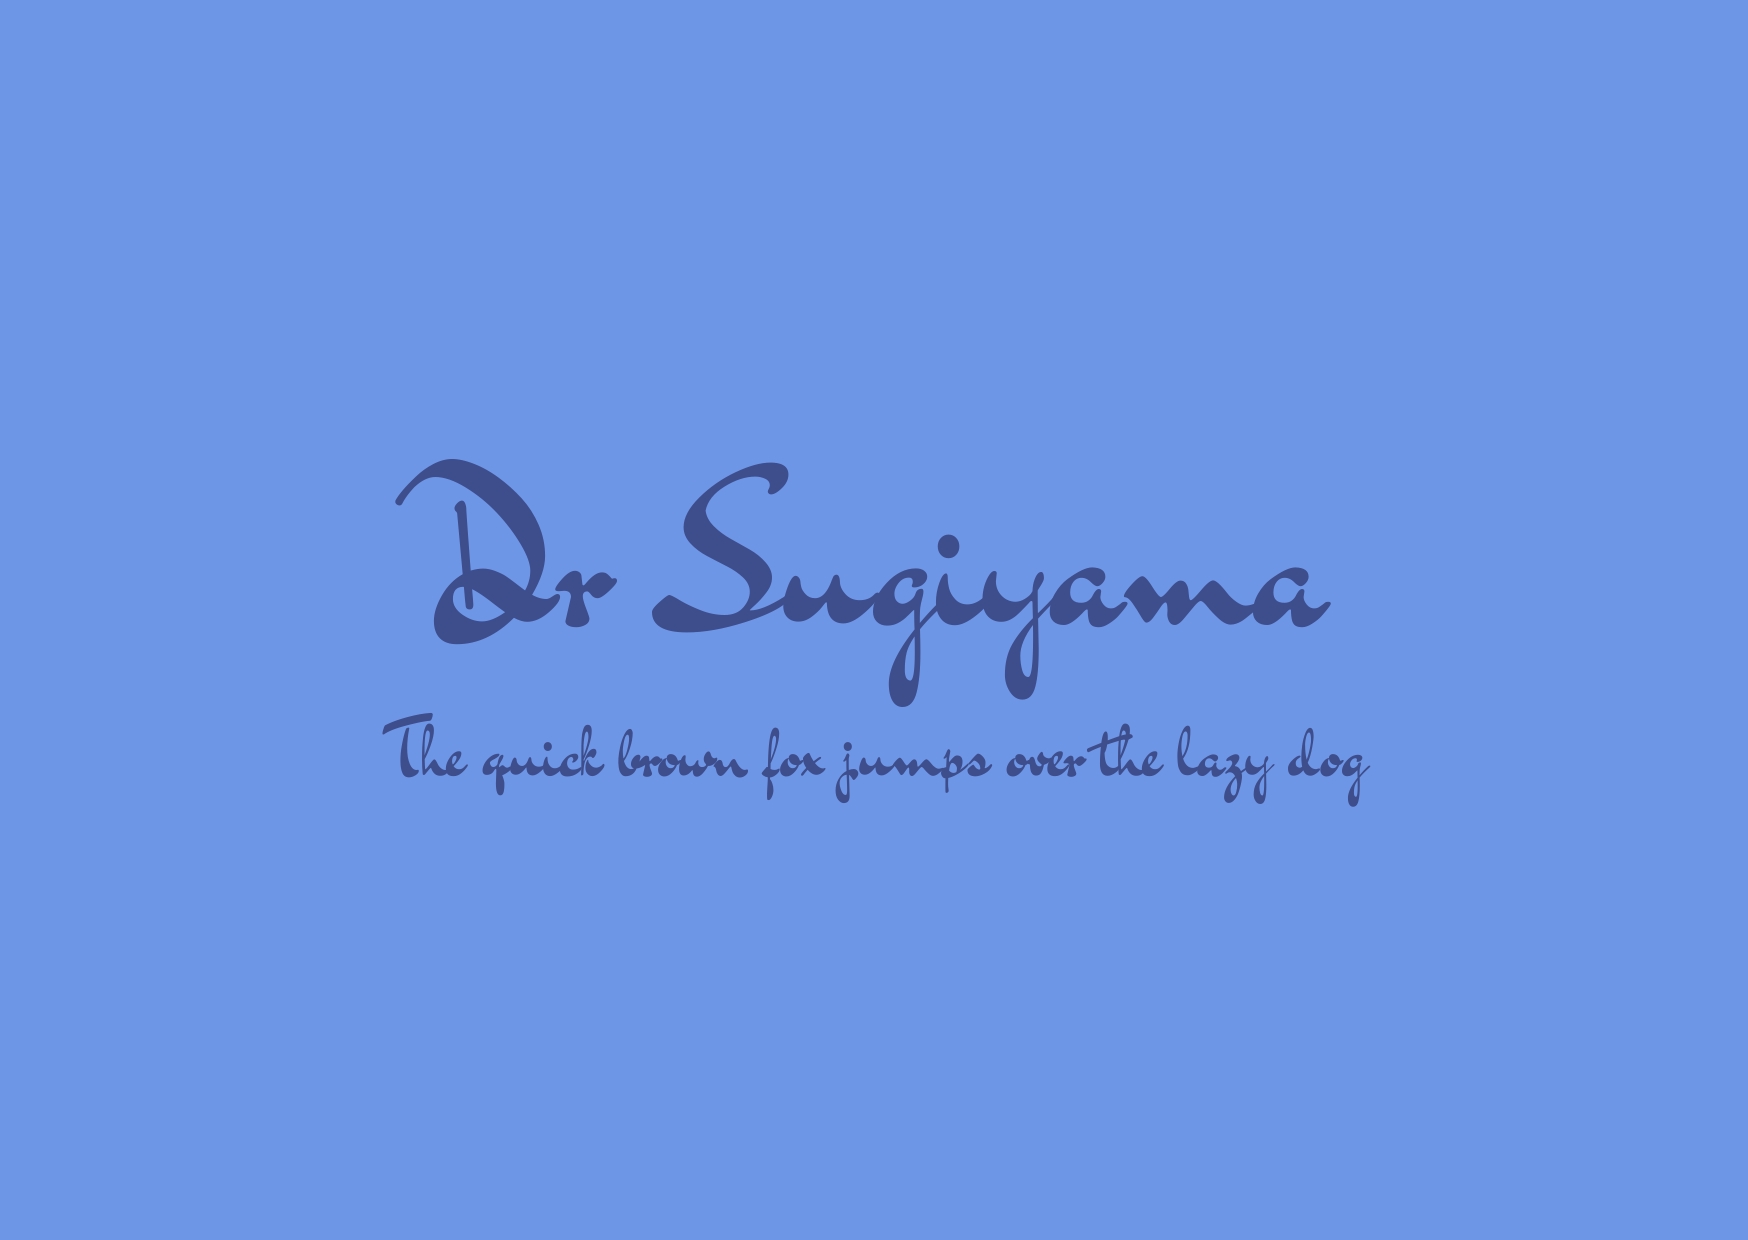 Blogduwebdesign police manuscrite dr sugiyama